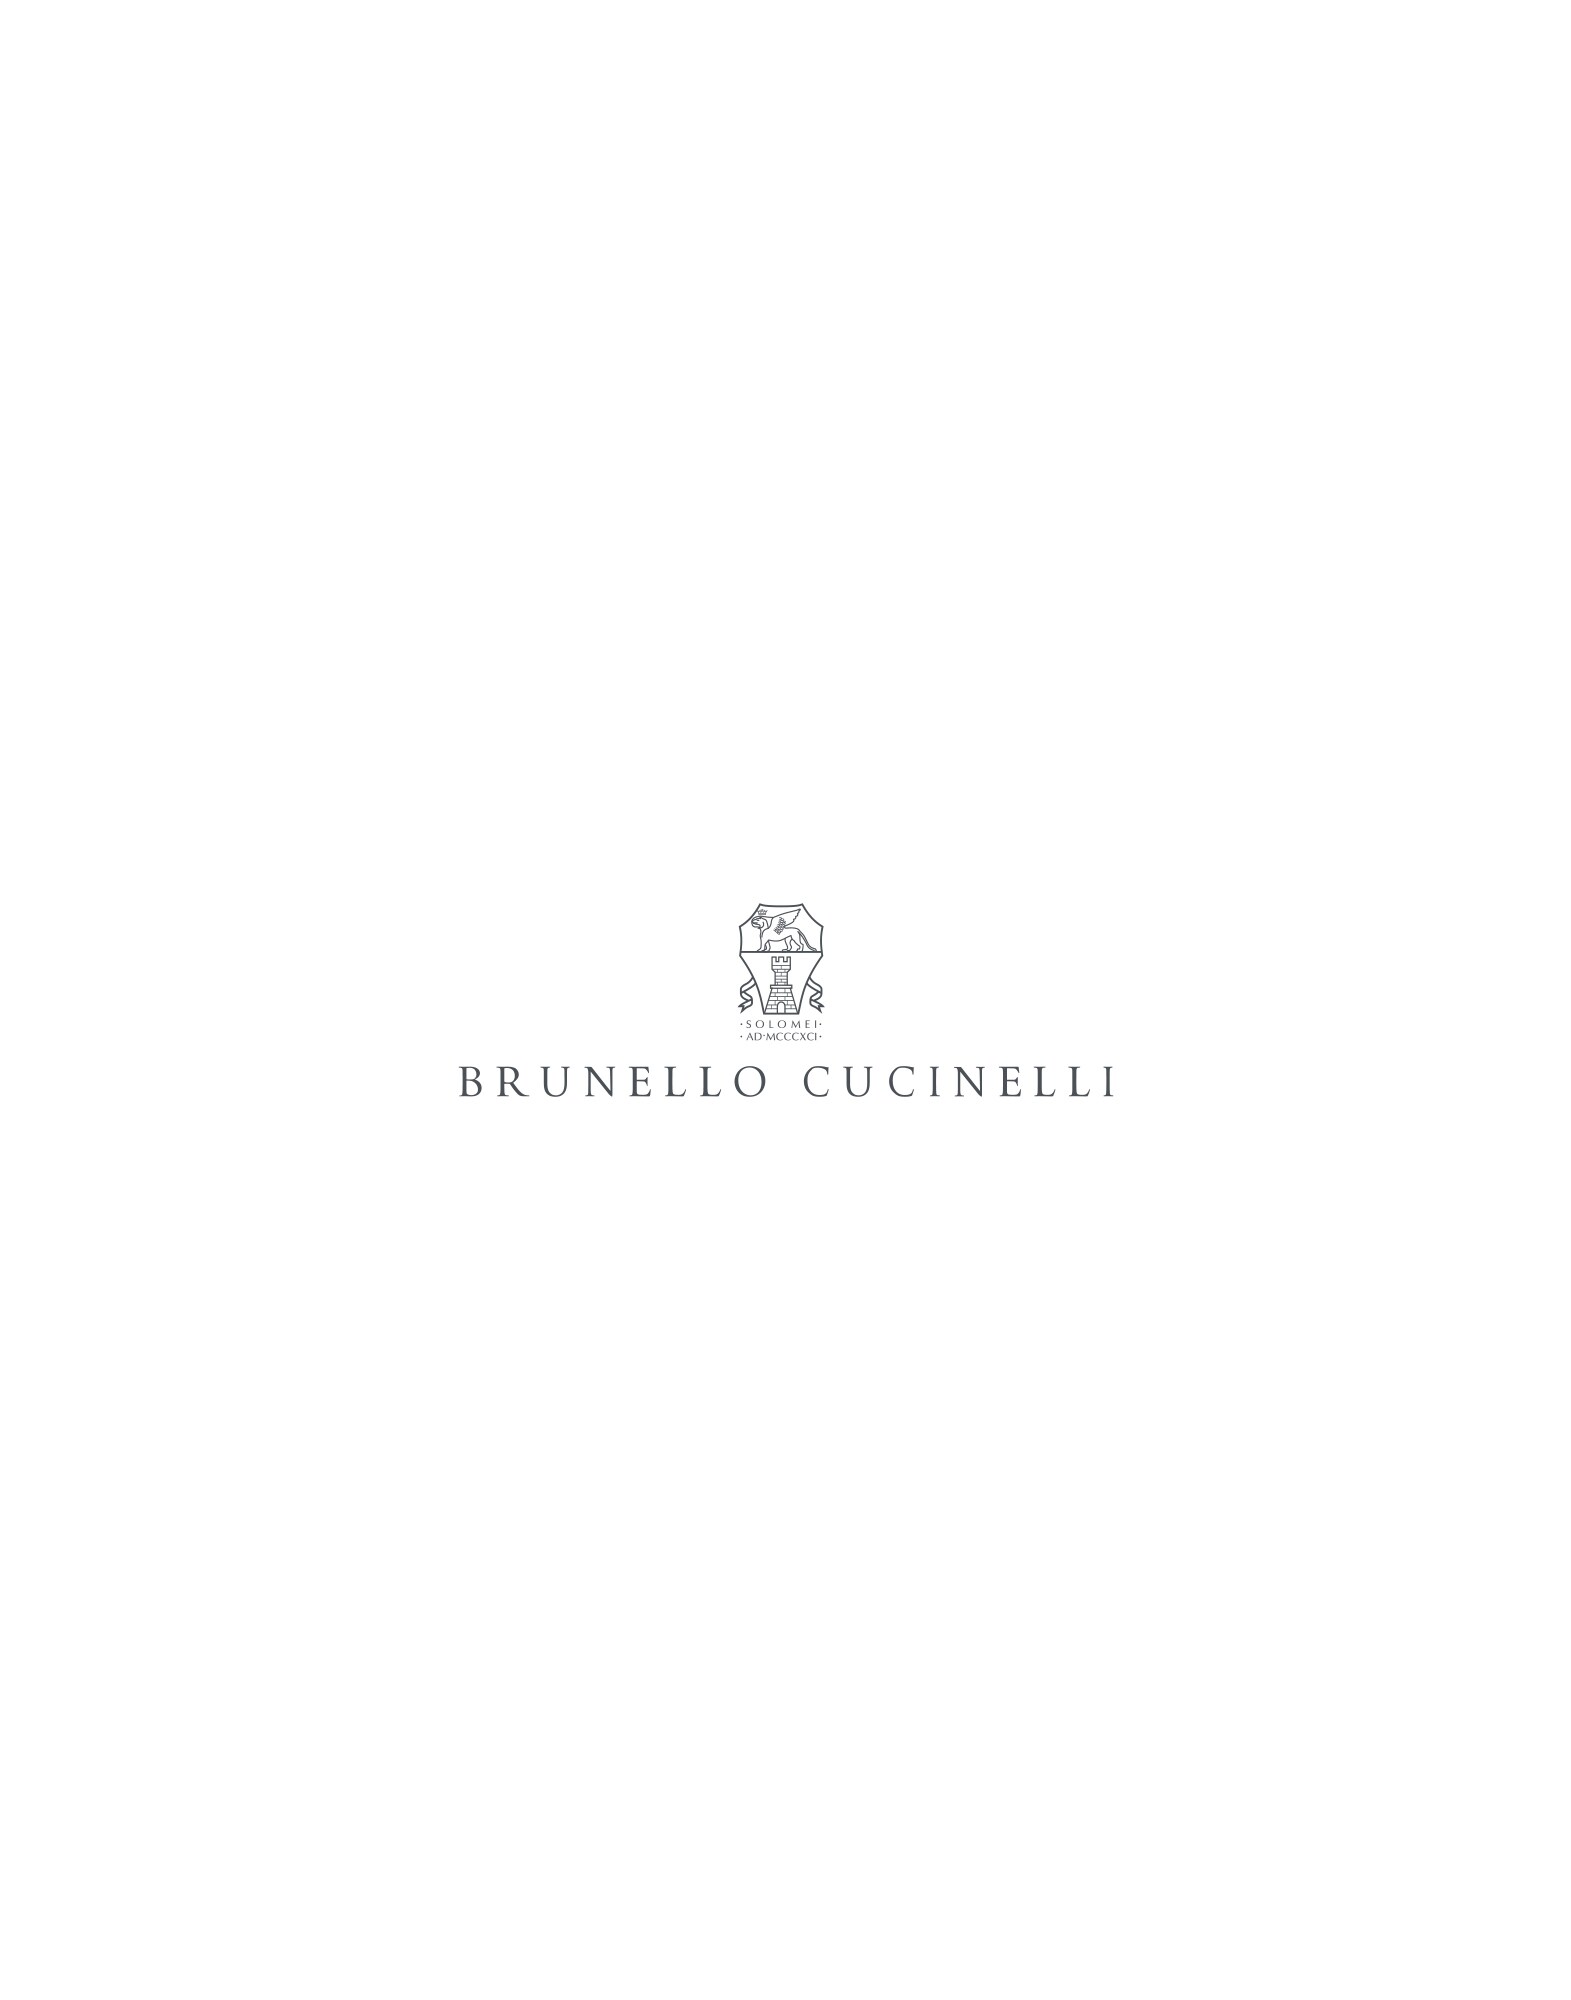 Mr. Brunello - accessibility.description.large